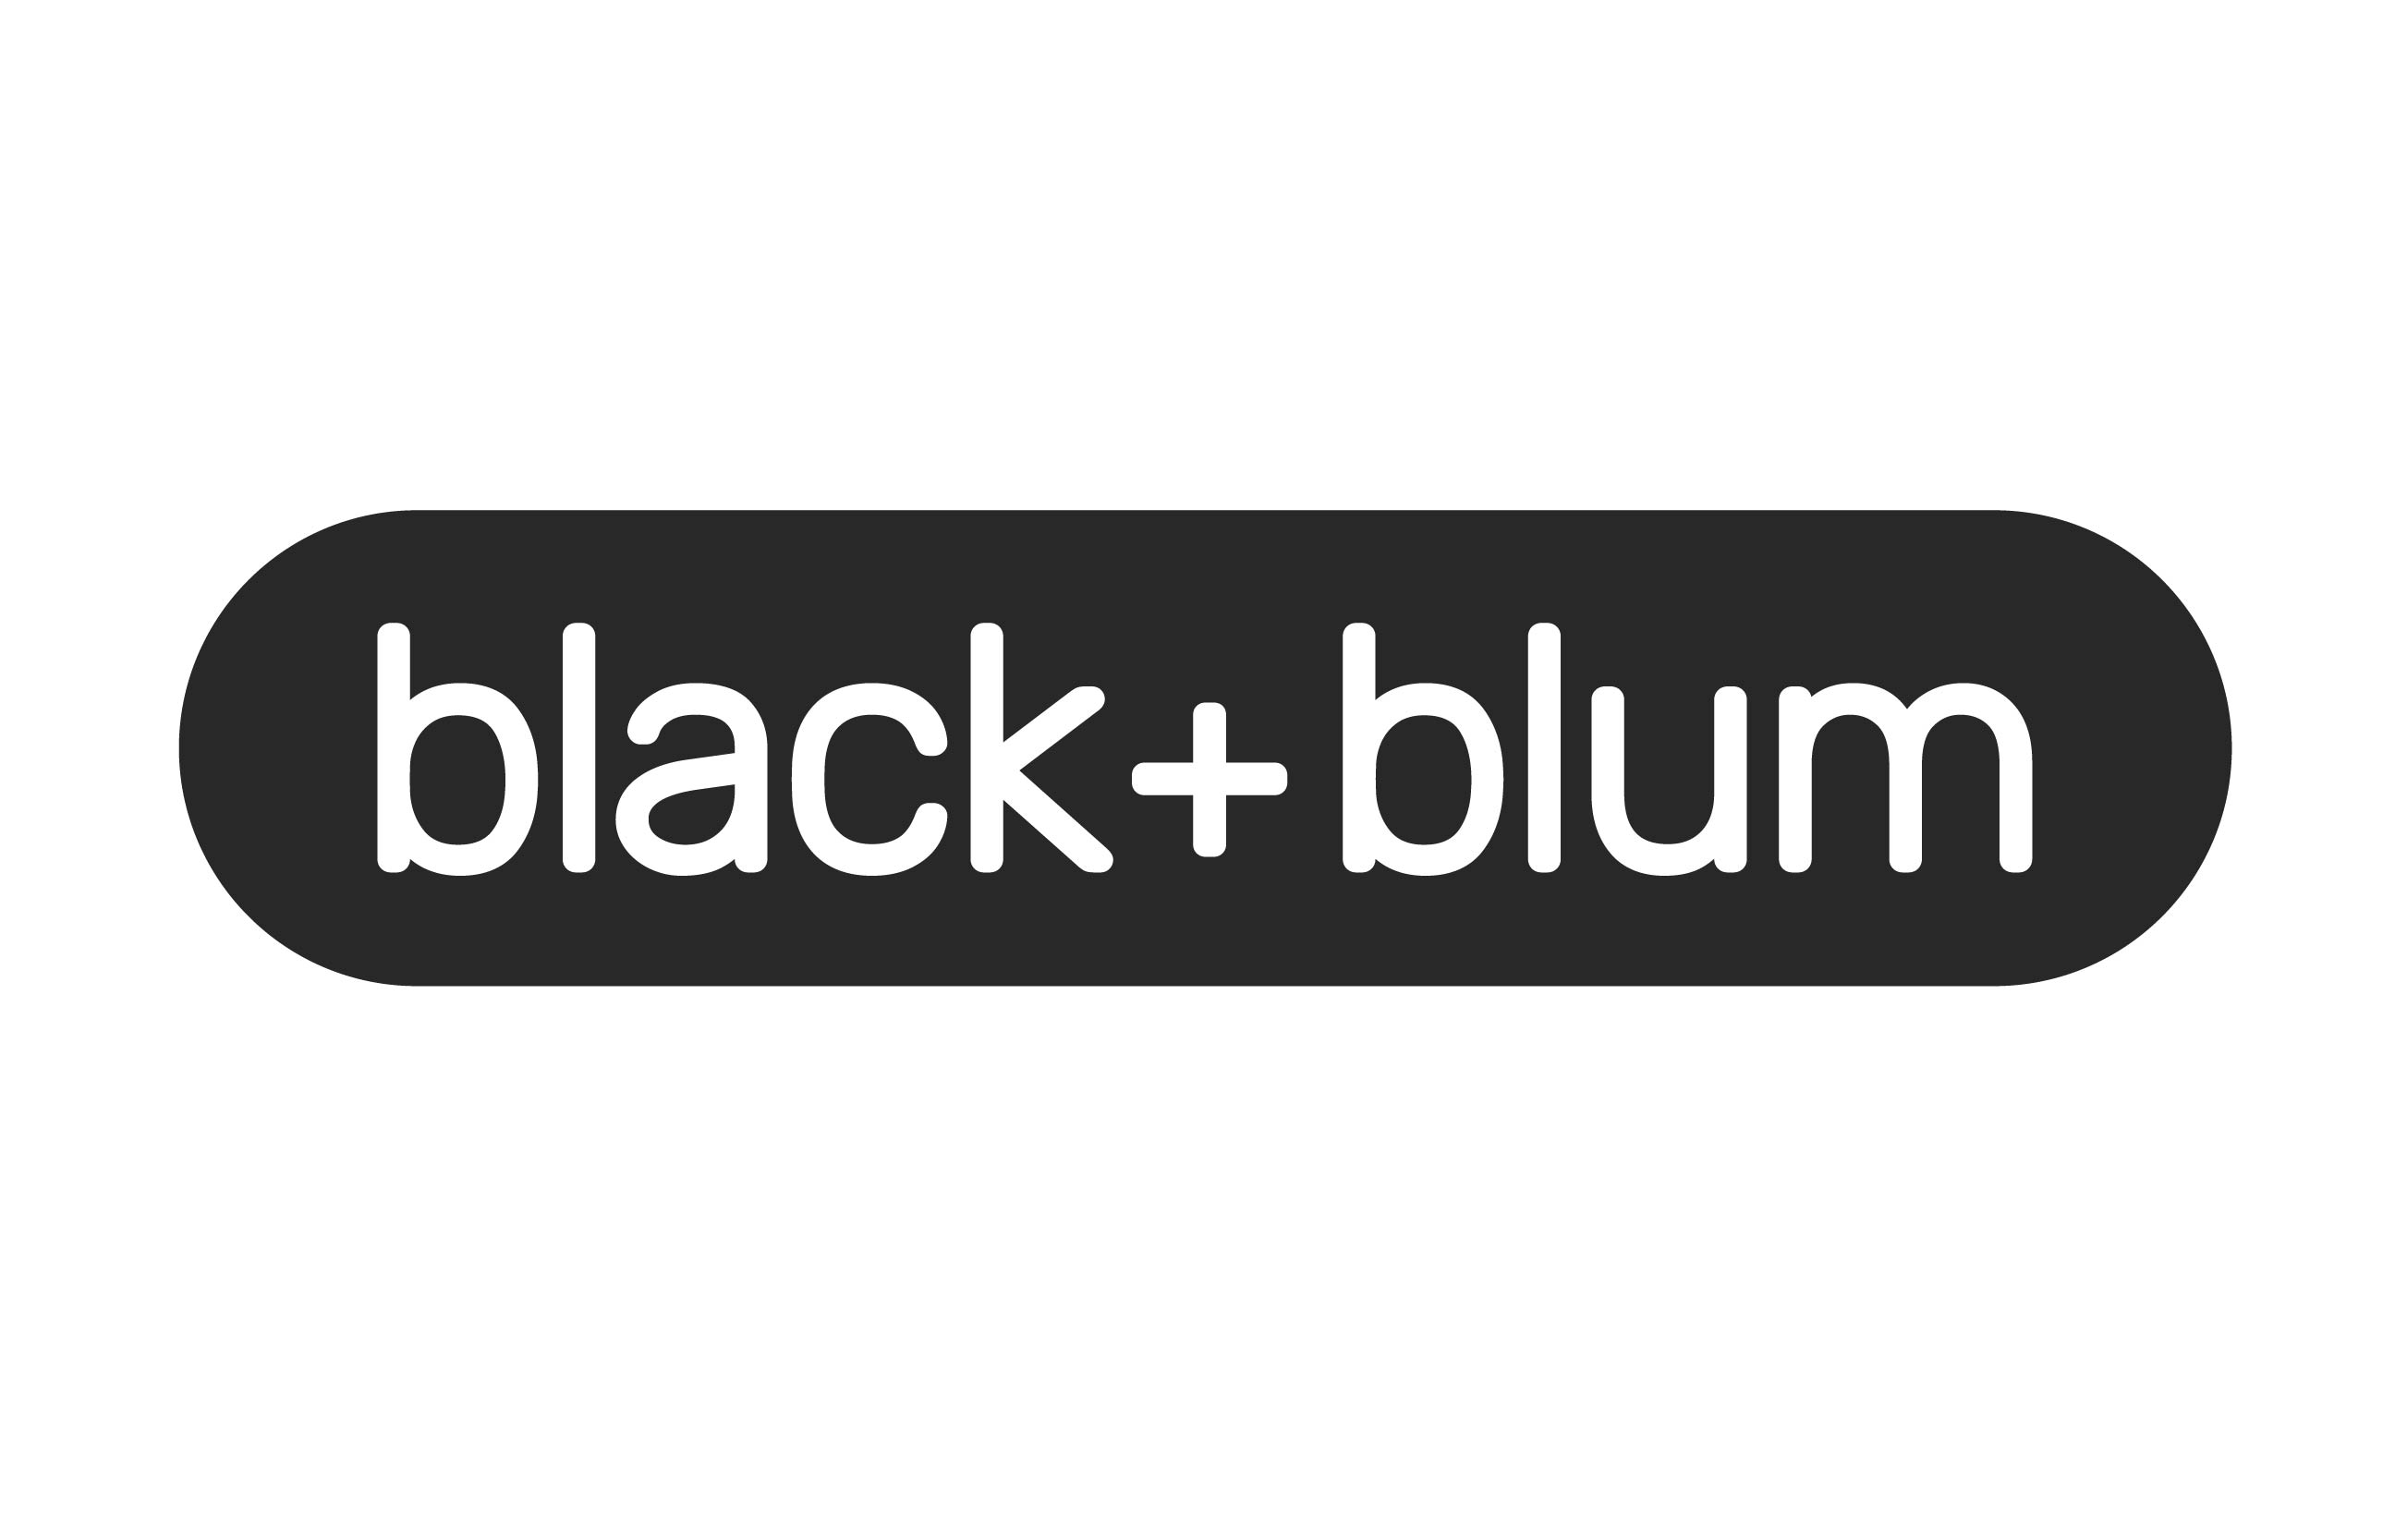 NEW IN - BLACK+BLUM